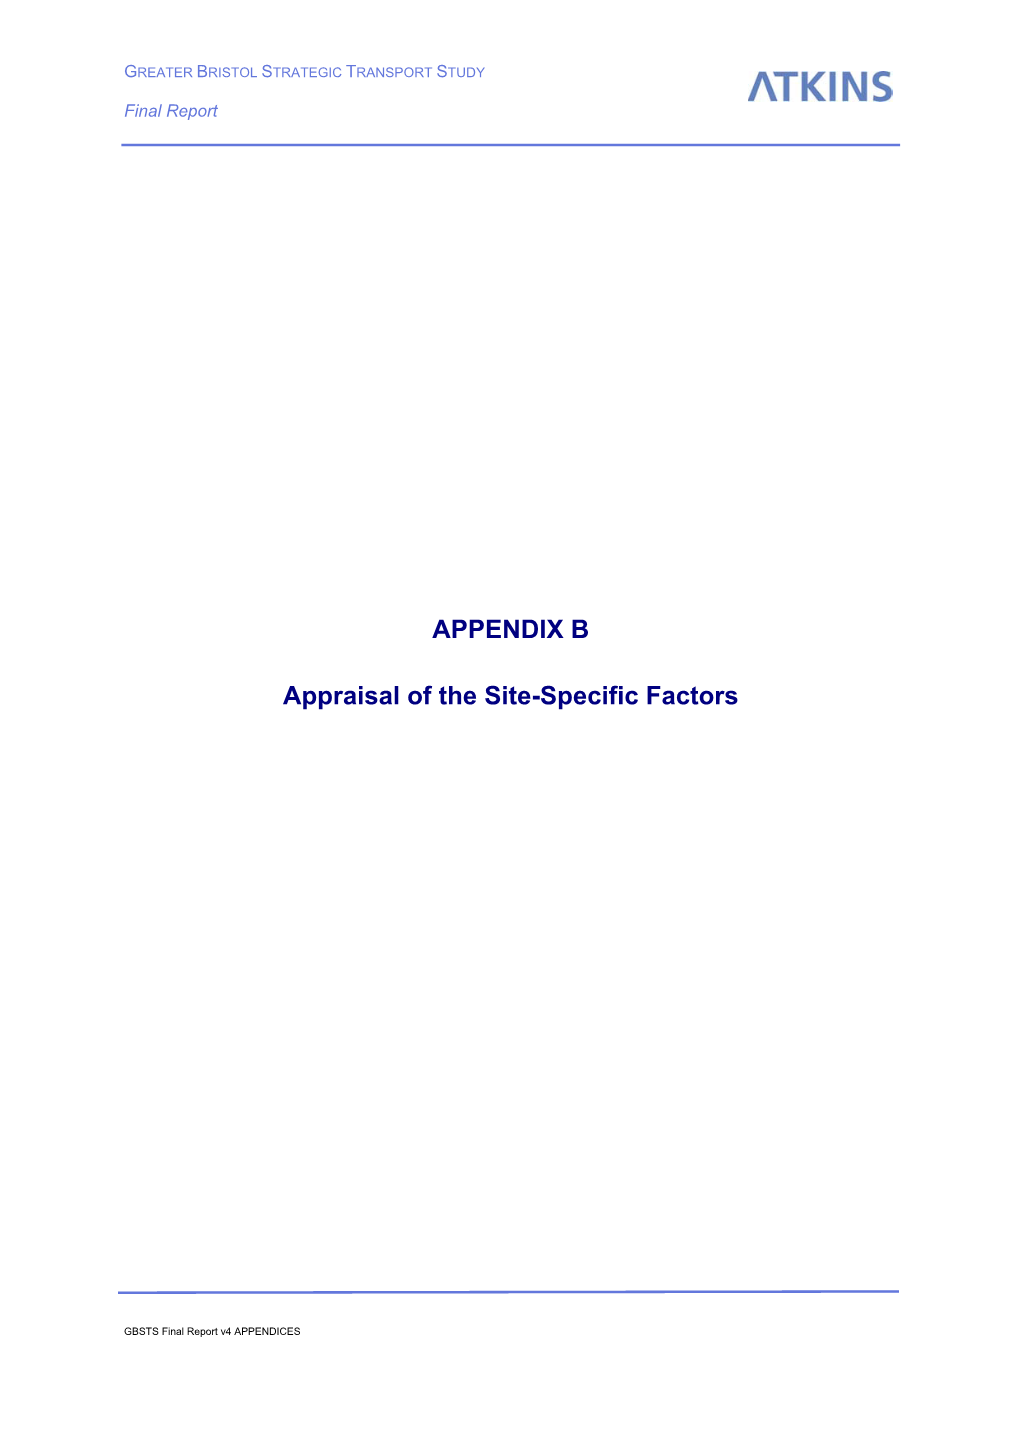 APPENDIX B Appraisal of the Site-Specific Factors